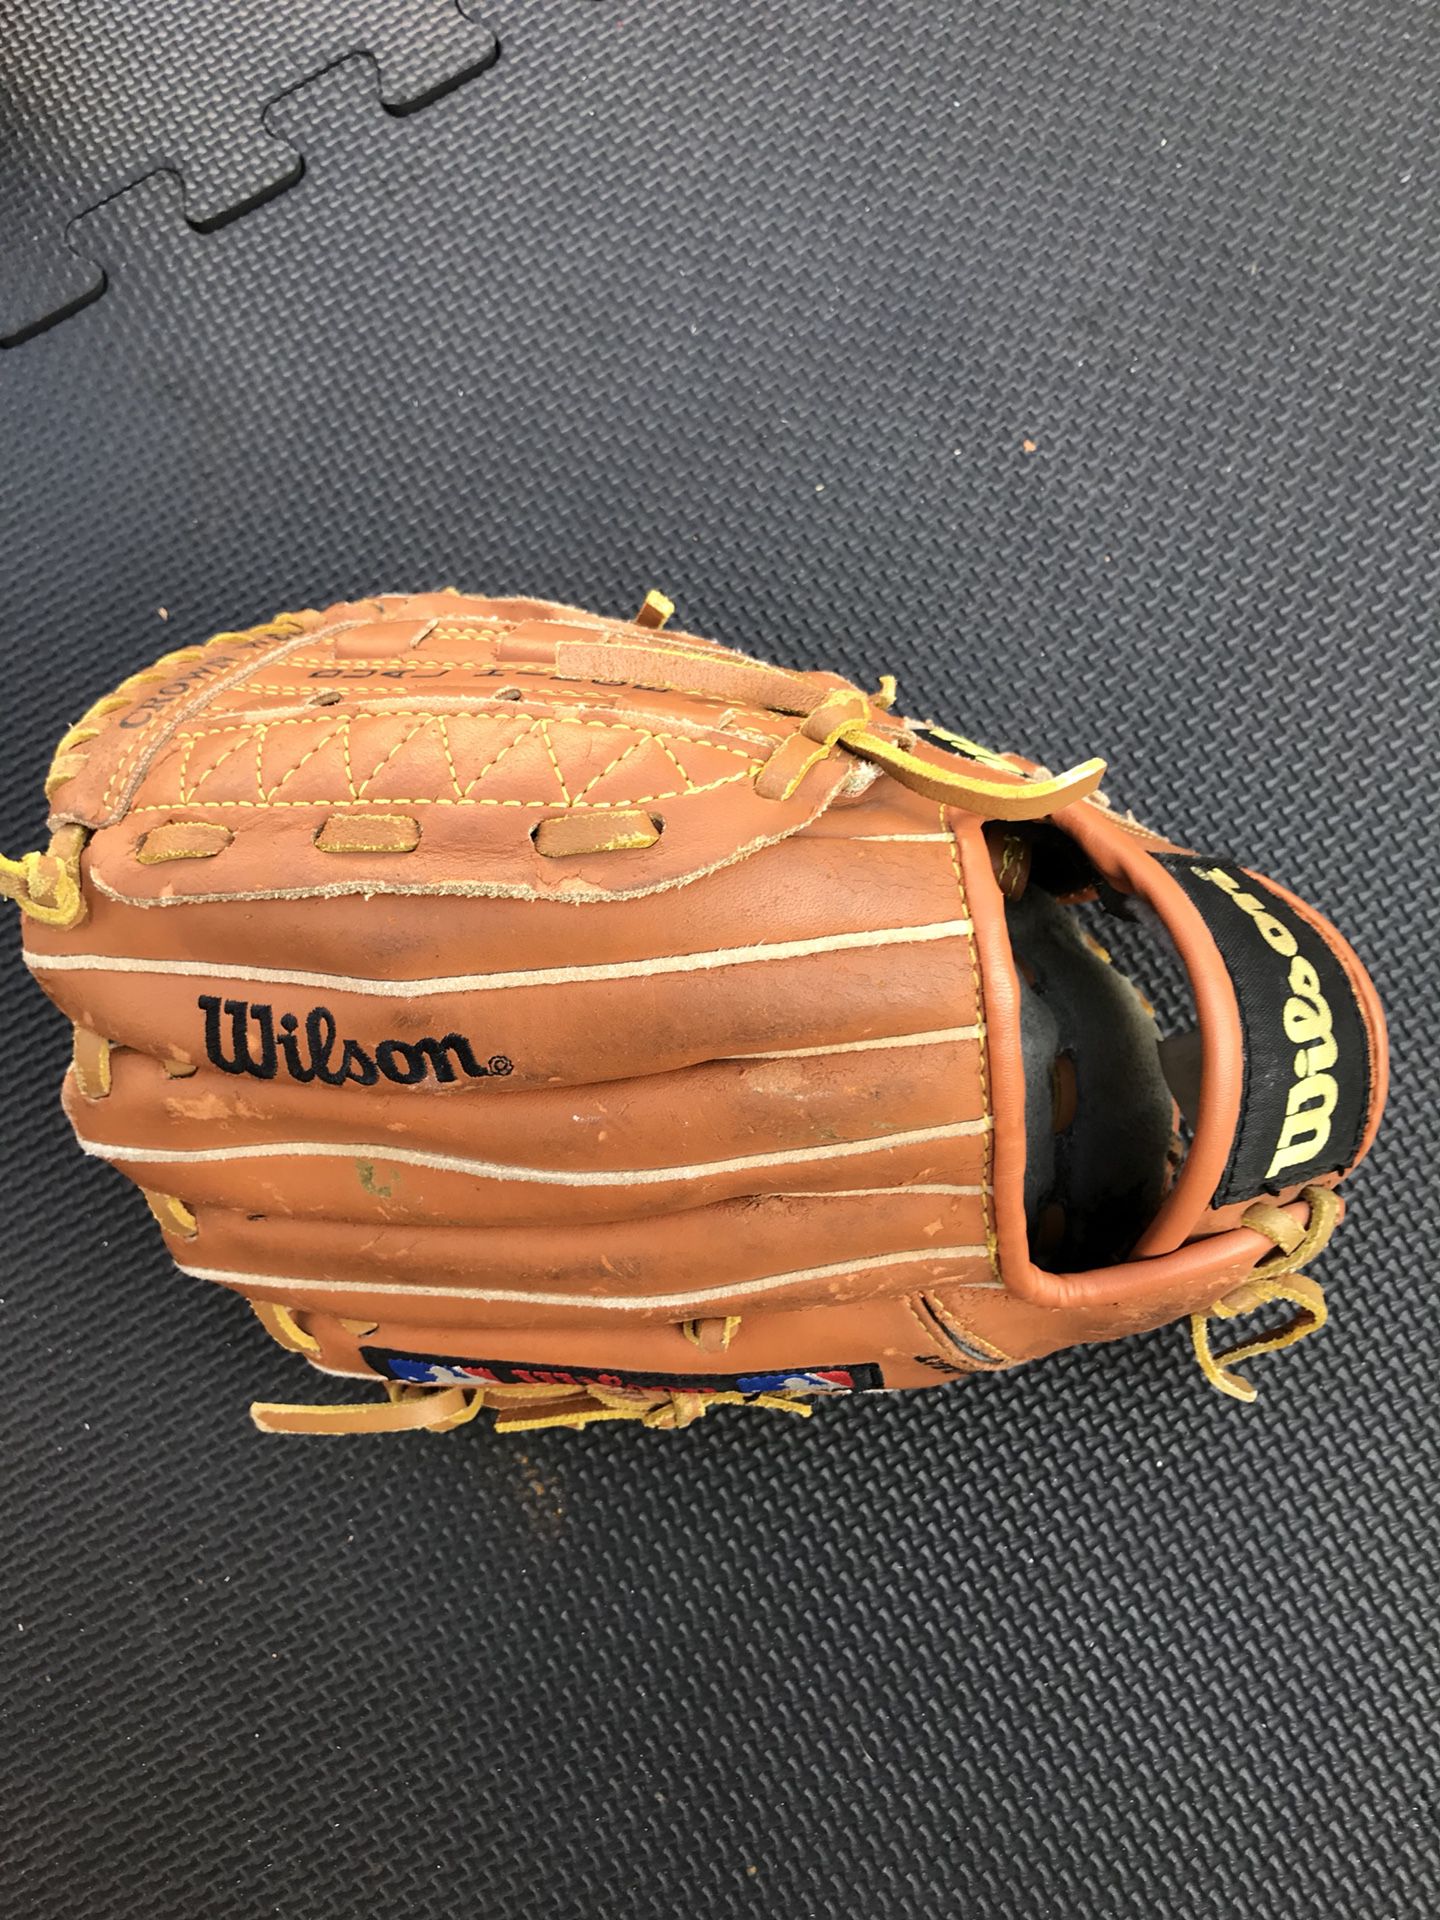 Kids Baseball glove for $5 Firm!!!